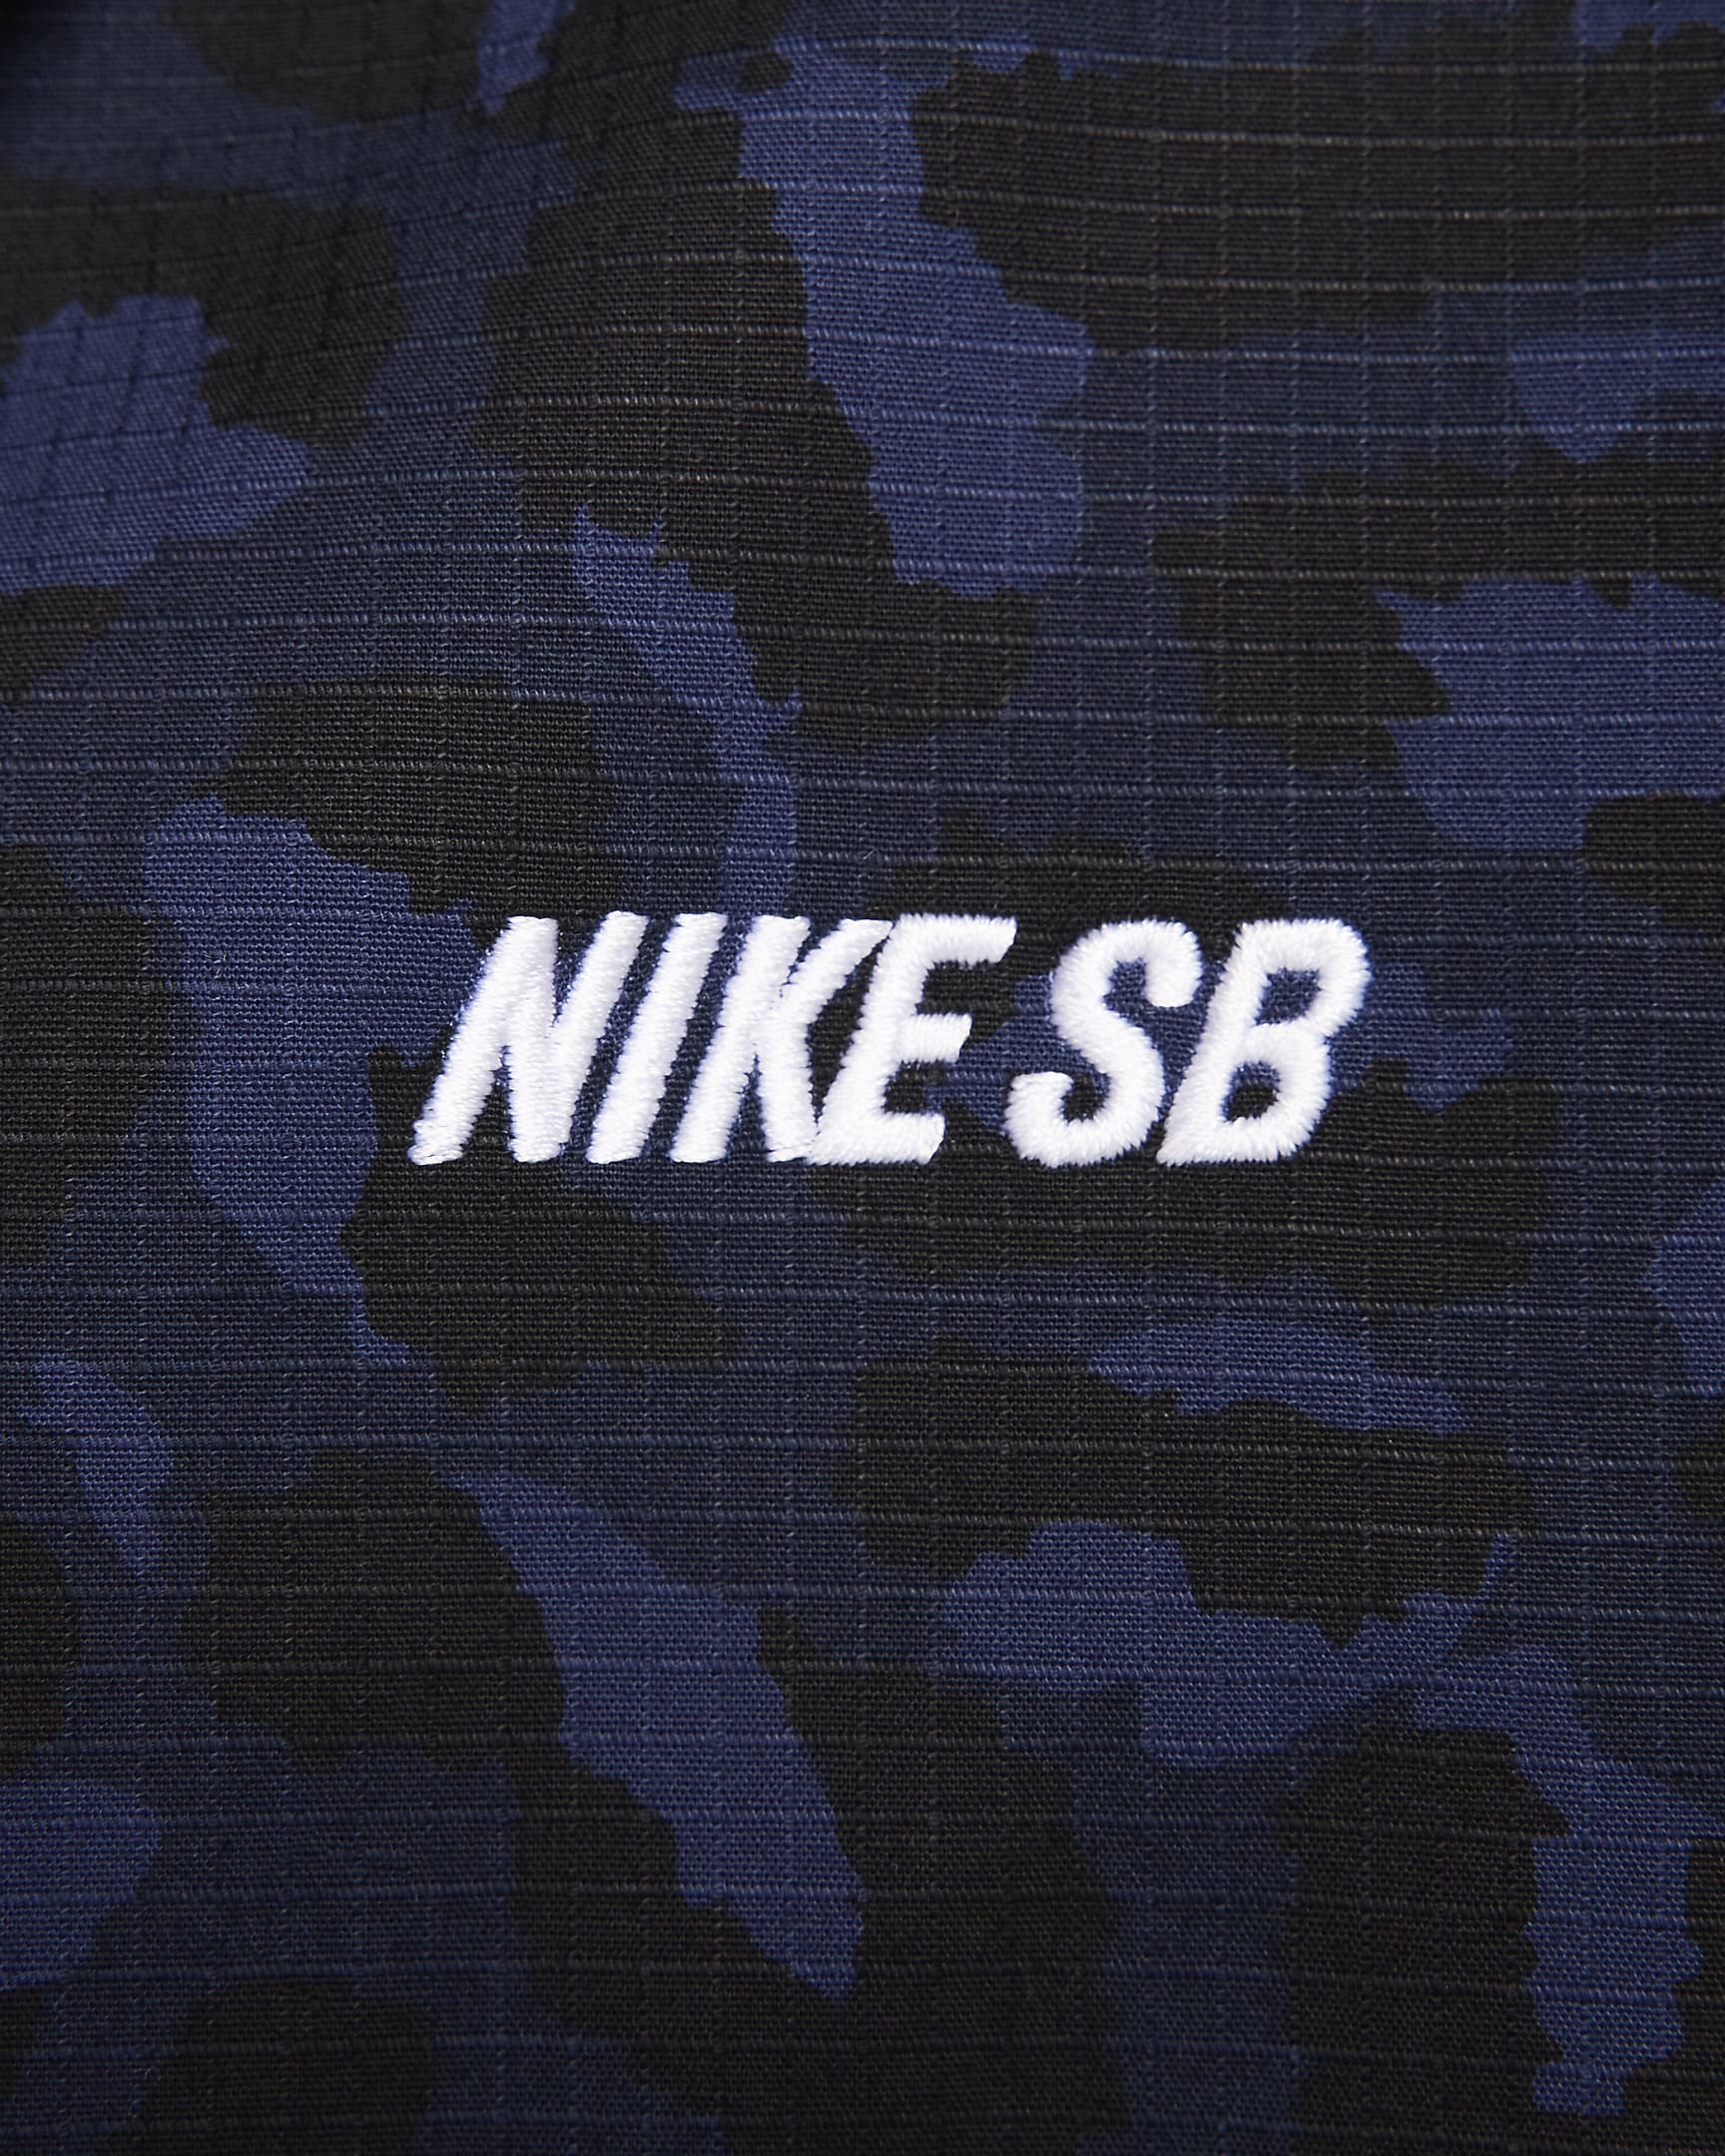 NIKE SB All-Over-Print Skate Chore Coat Jacke Nike Skateboarding 